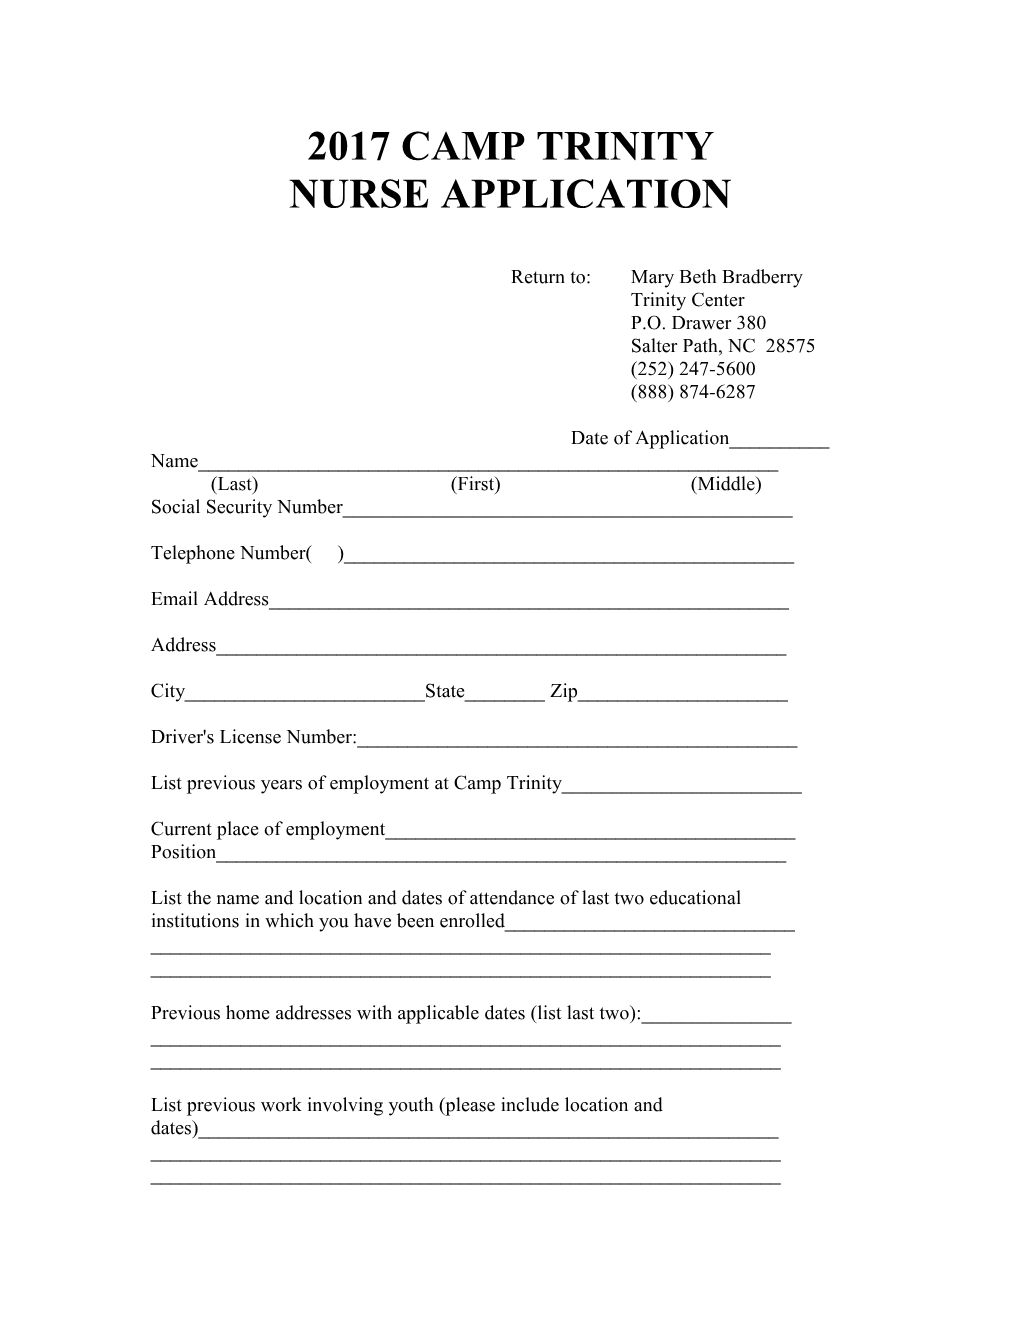 Nurse Application